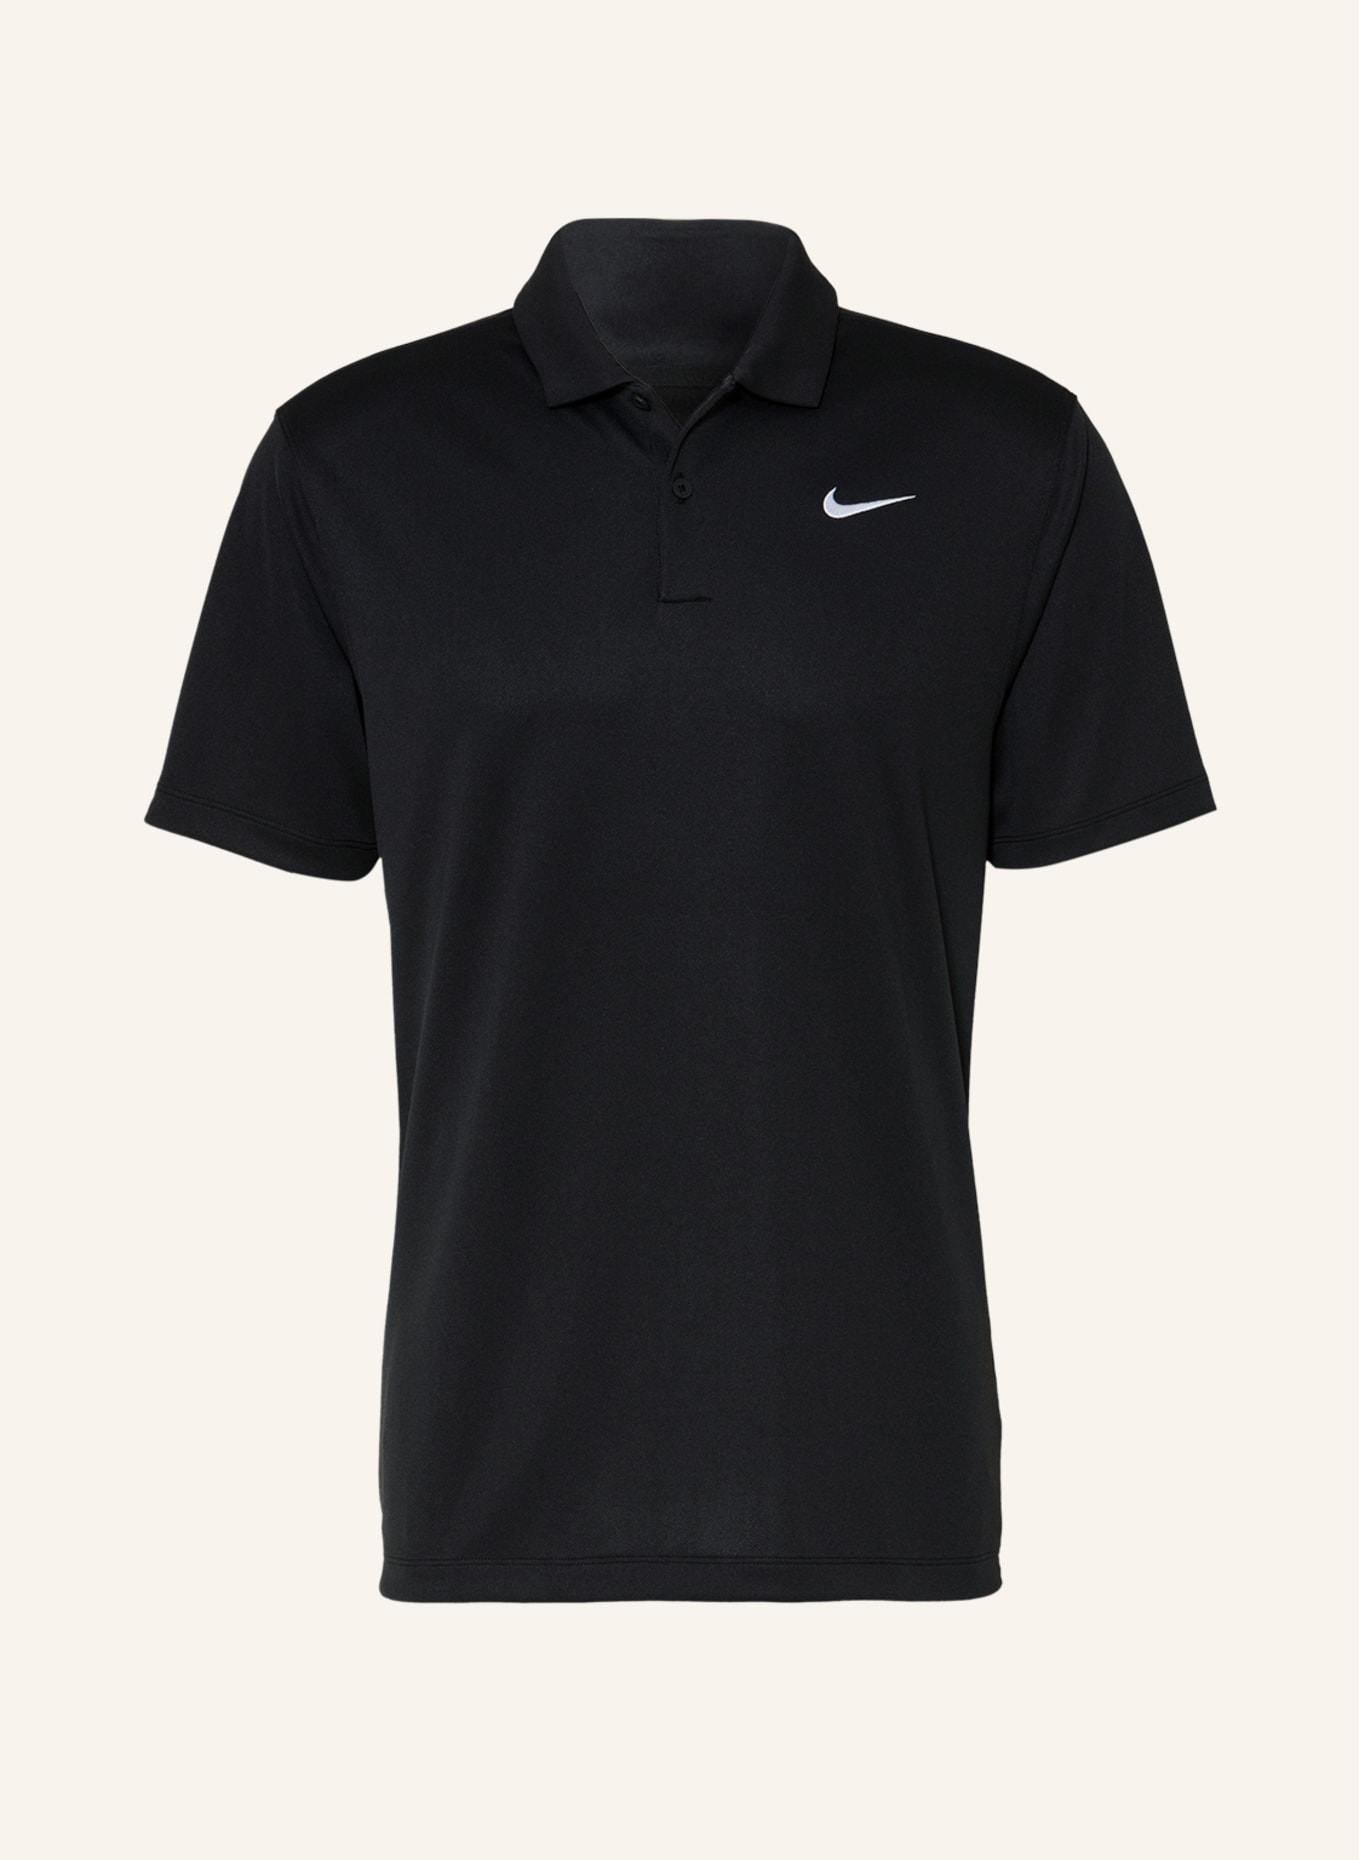 Nike Funktions-Poloshirt NIKECOURT DRI-FIT, Farbe: SCHWARZ/ WEISS (Bild 1)